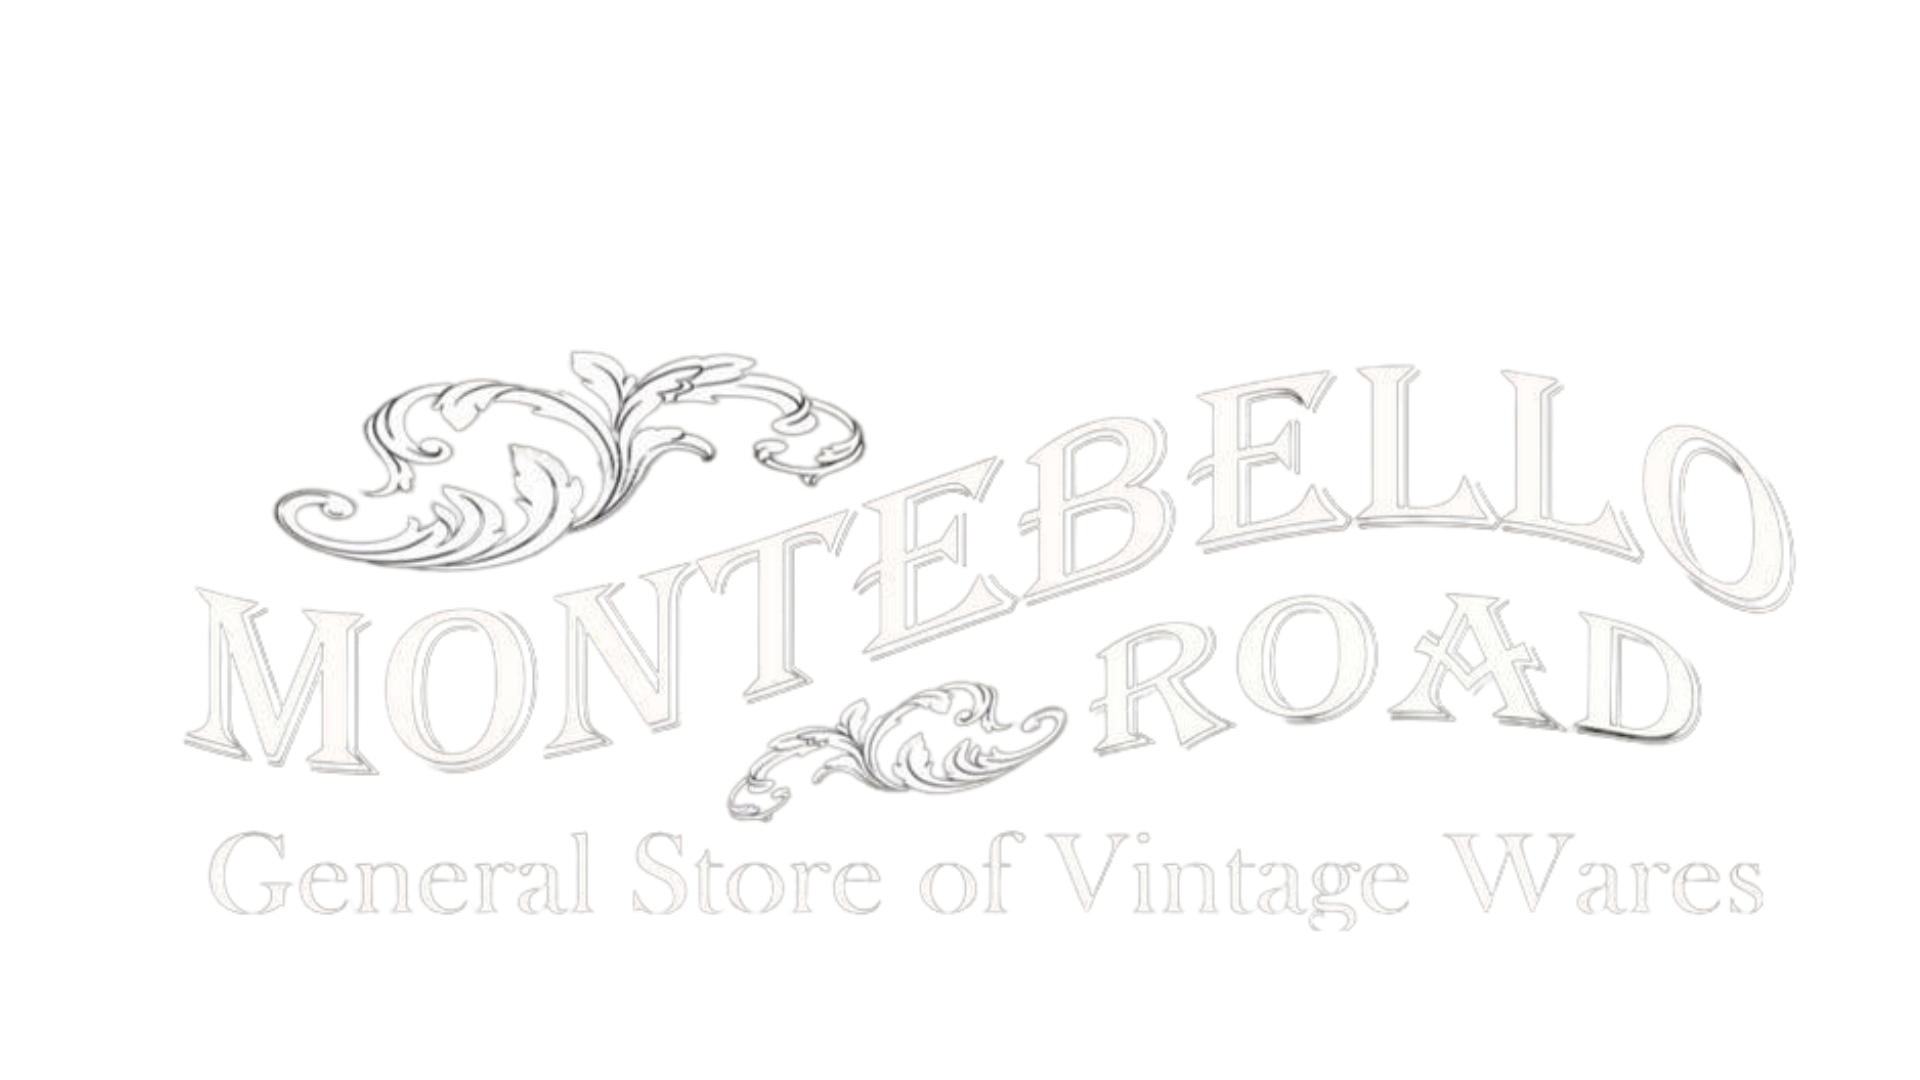 Montebello Road Logo